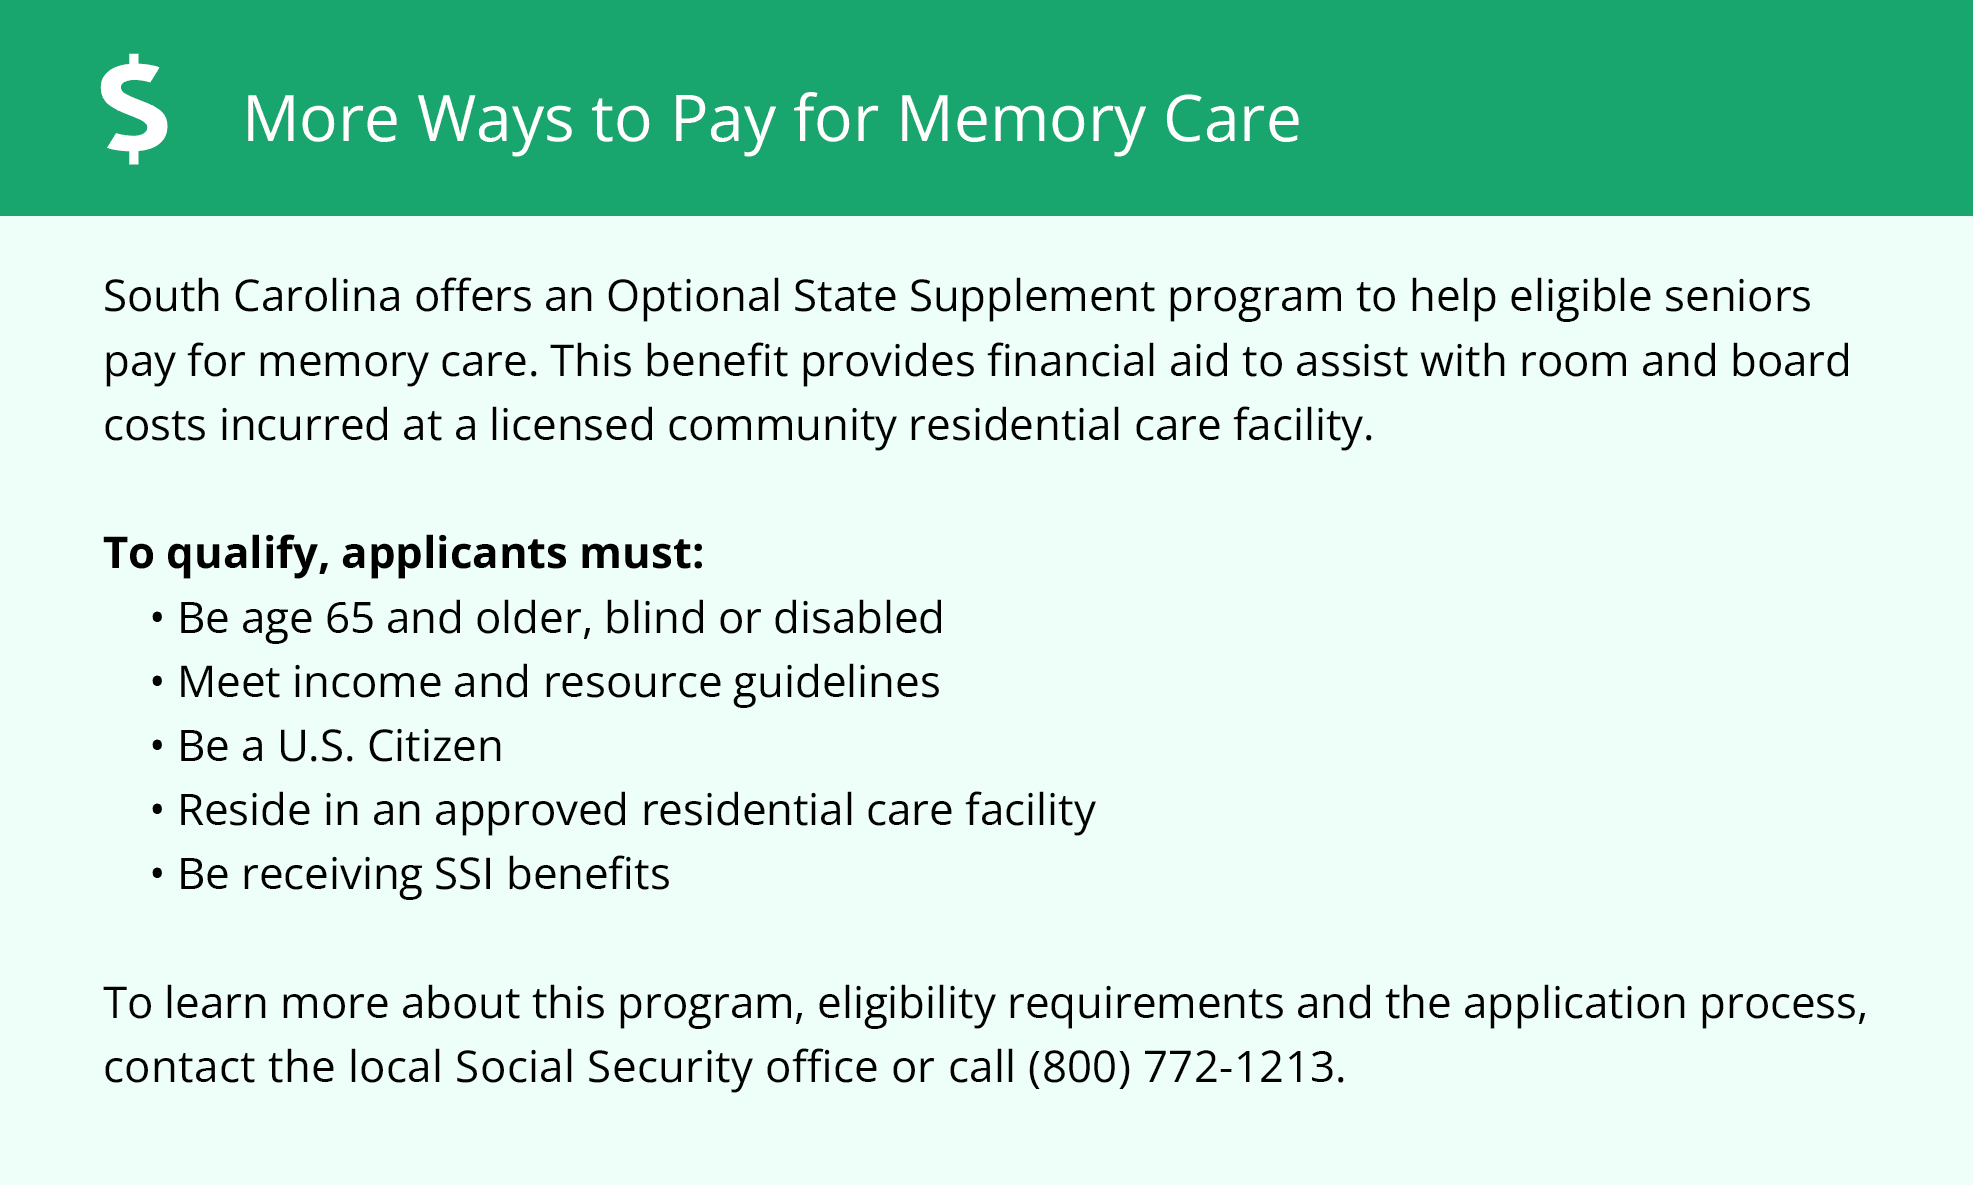 More Ways to Pay for Memory Care - South Carolina